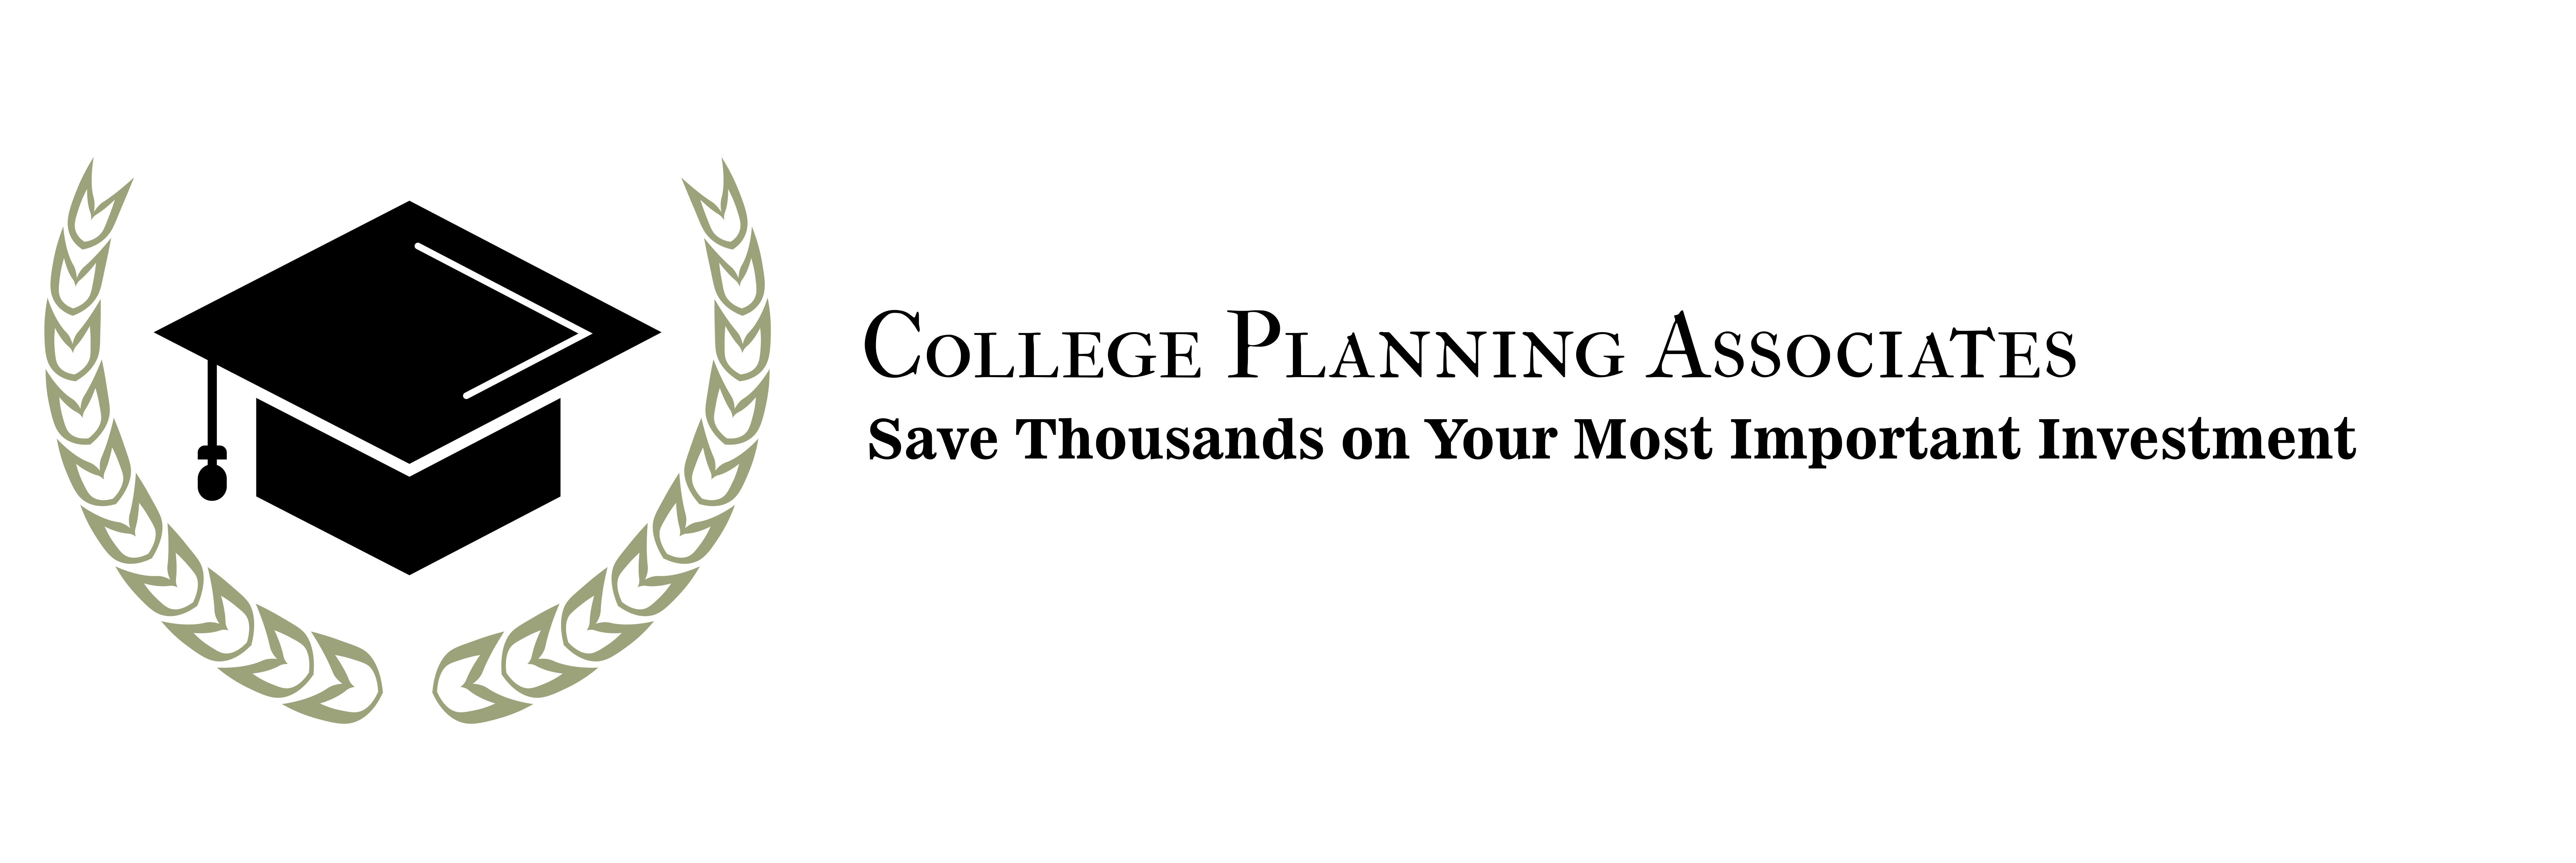 College Planning Associates Logo